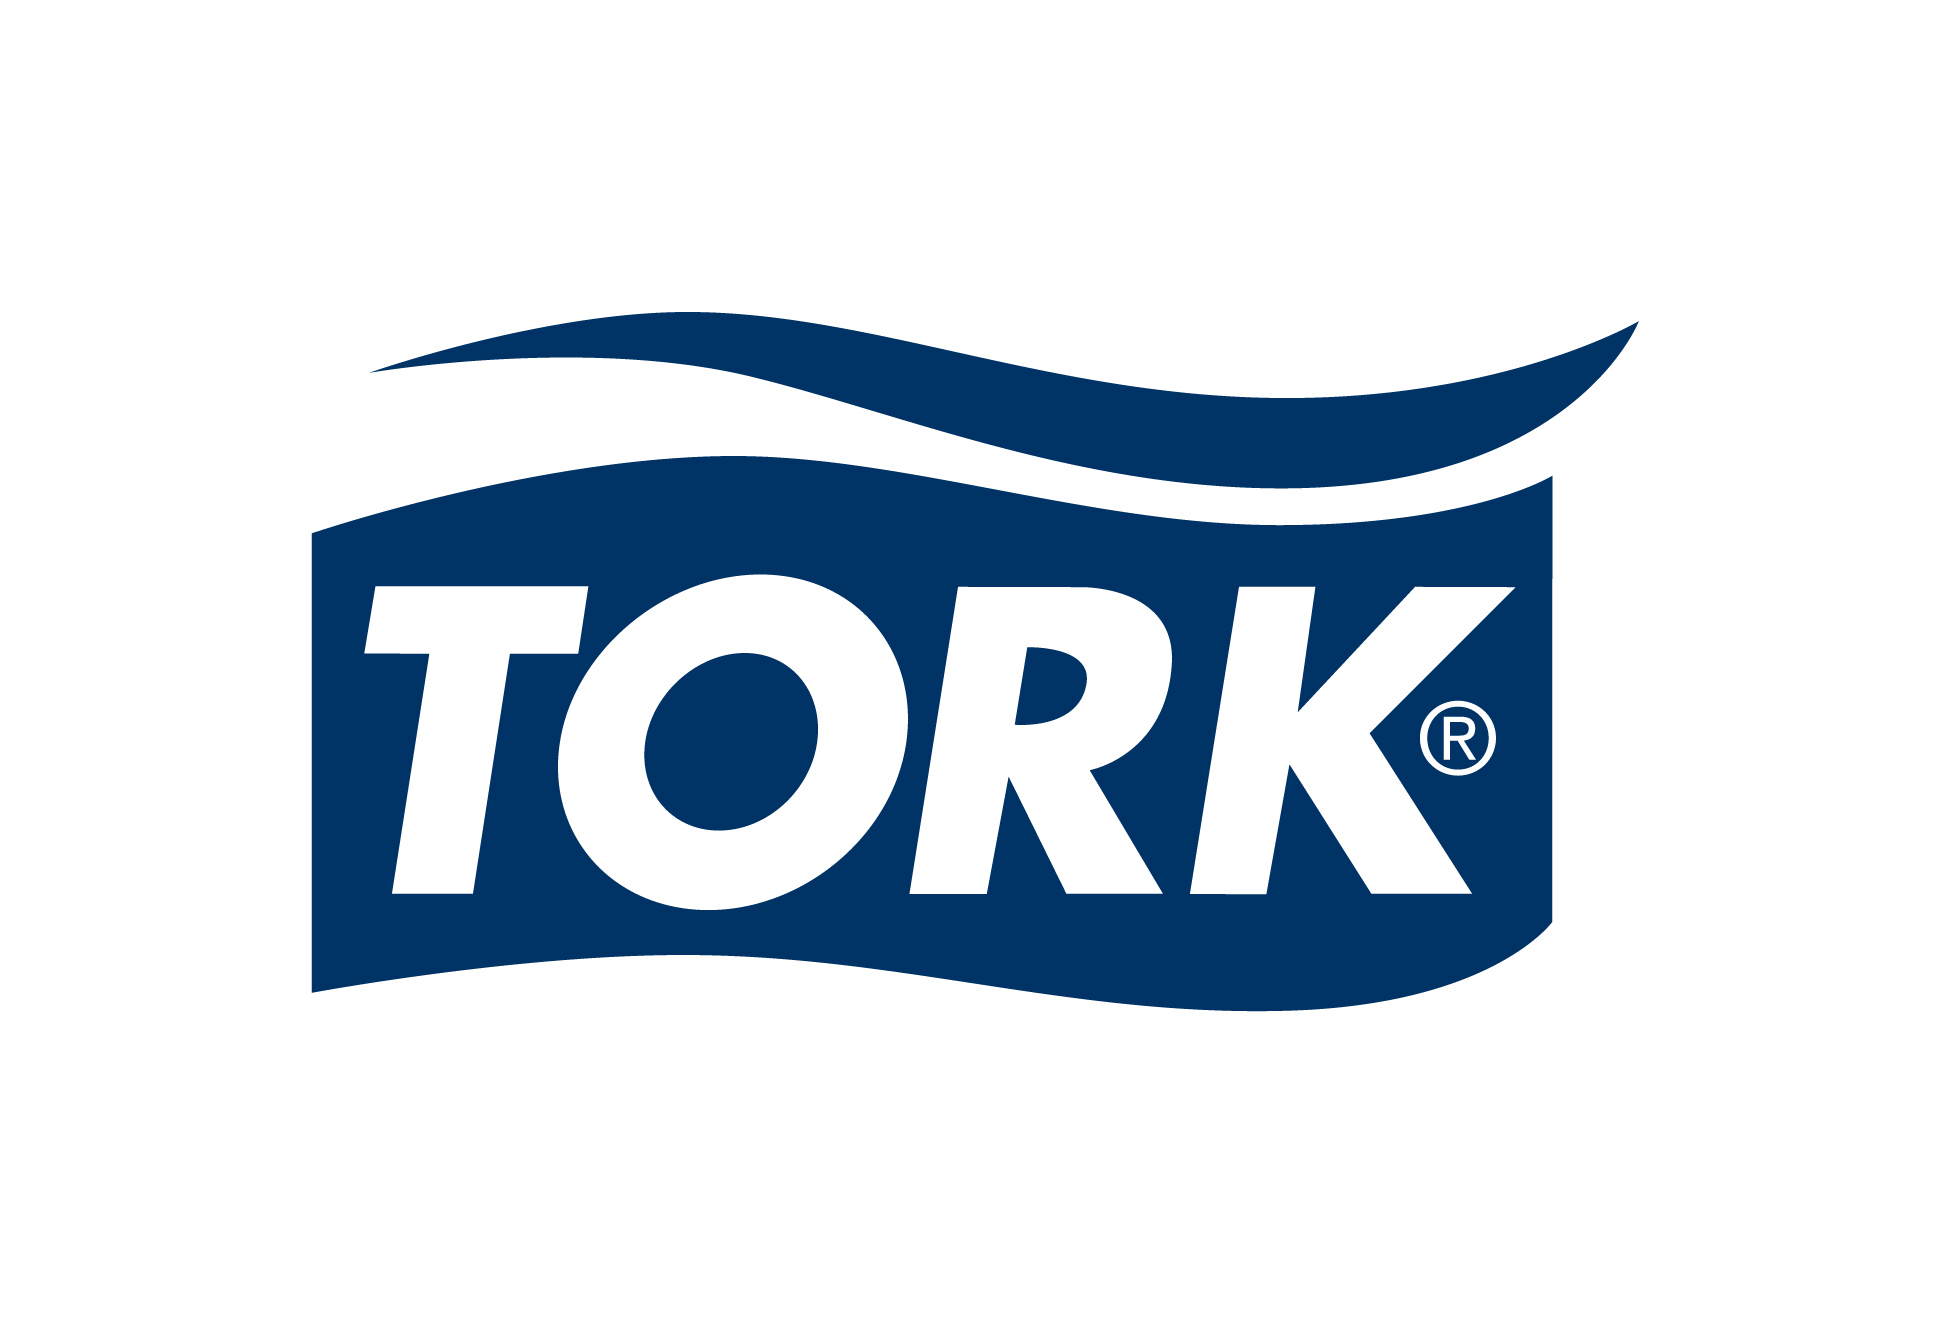 Tork logo.JPG